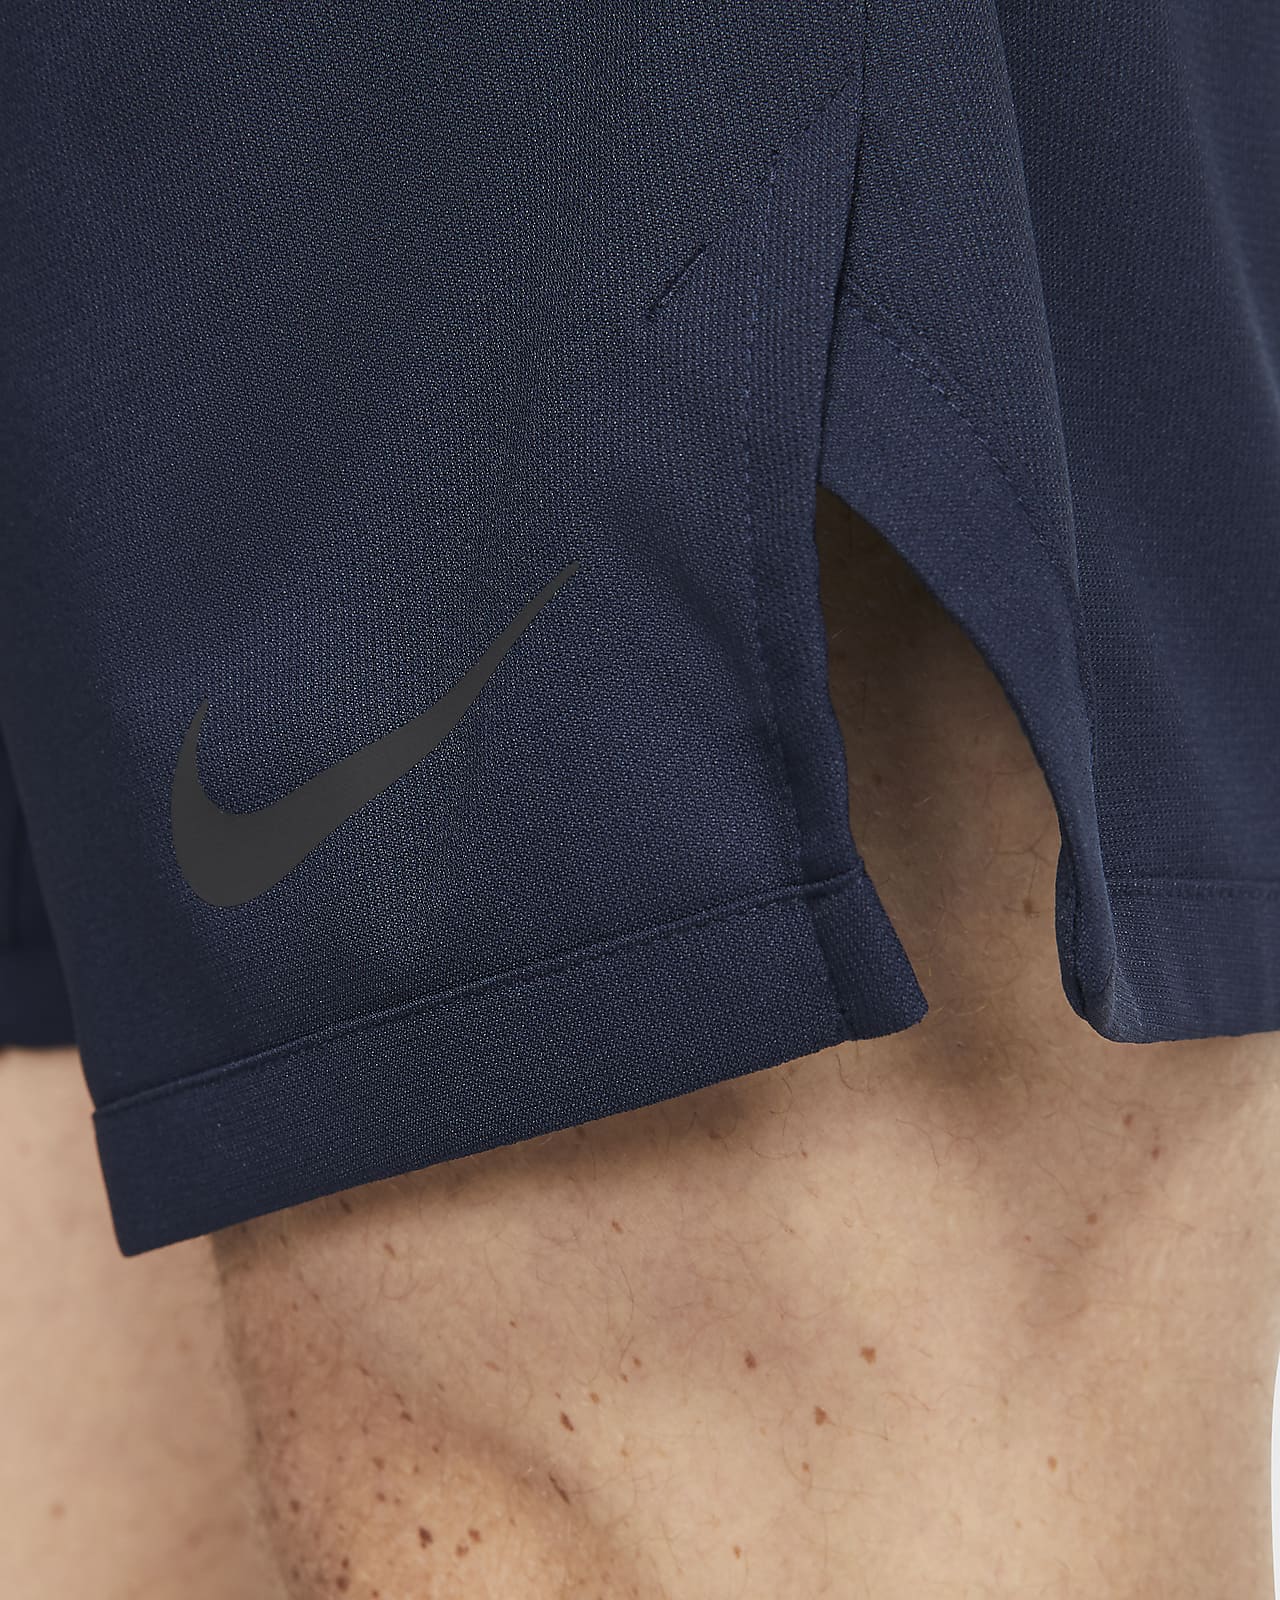 Nike Pro Flex Vent Max Men's Shorts.